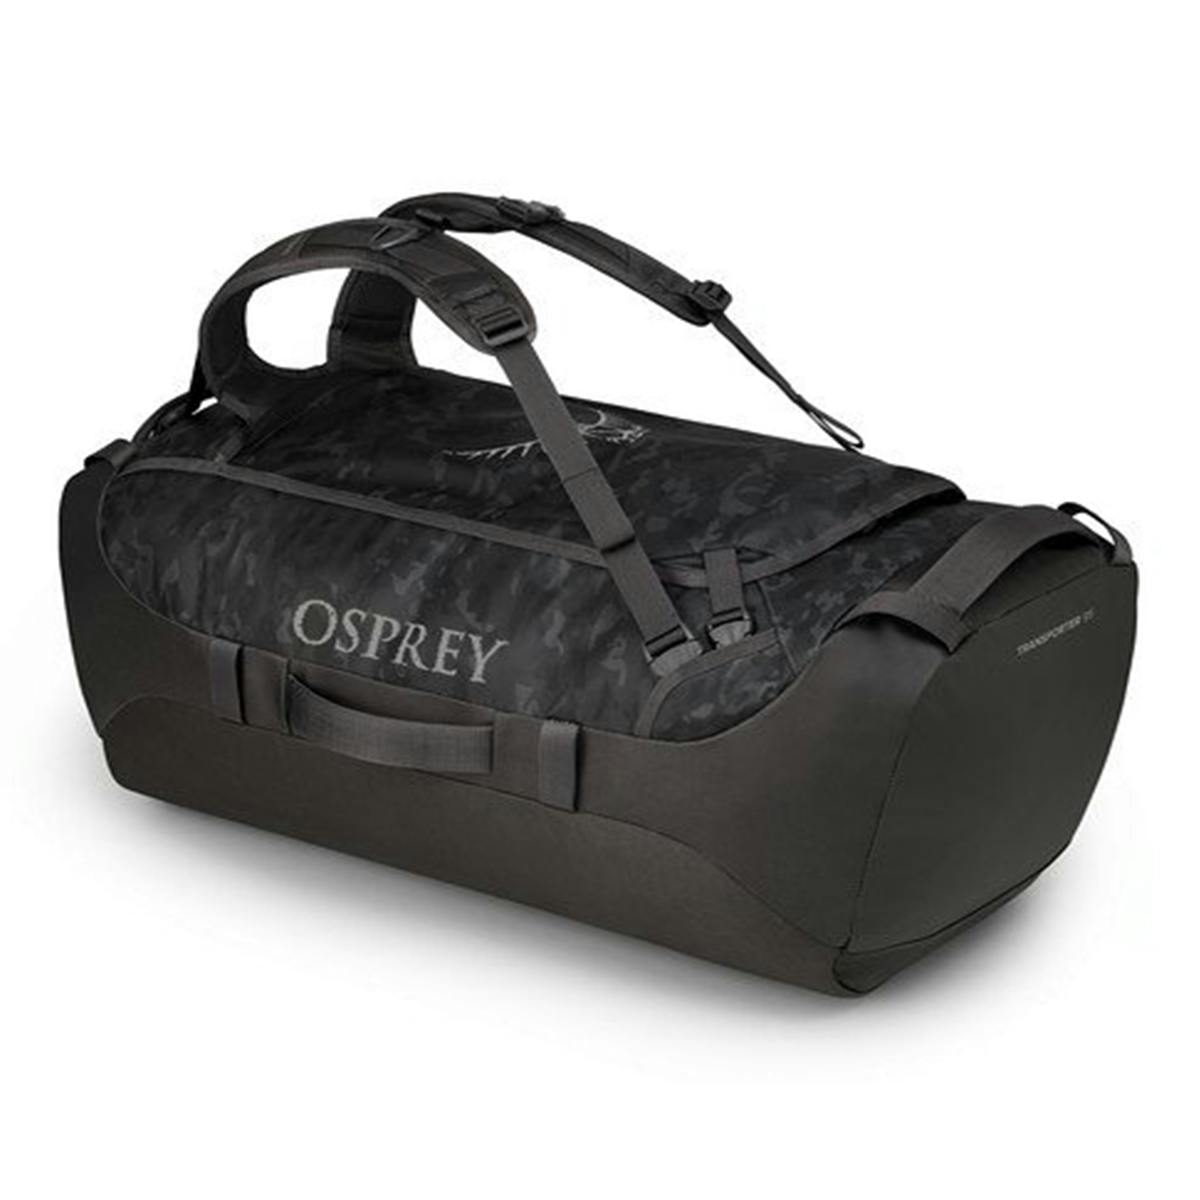 Osprey Transporter 95 Duffel Bag - 95 Liter - Camo Black